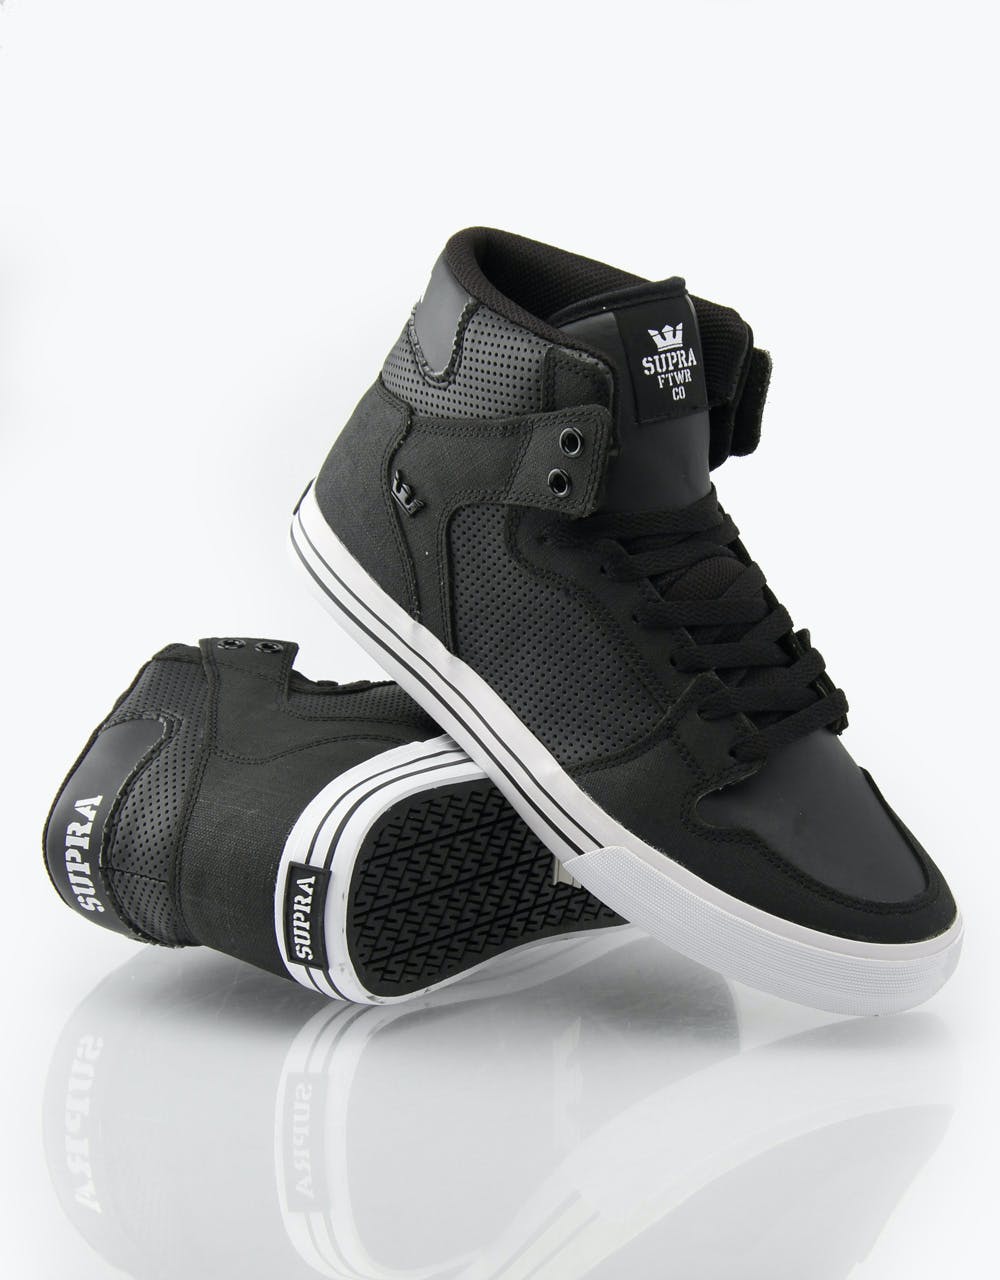 Supra Gunny "TUF" Vaider Skate Shoes - Black/White